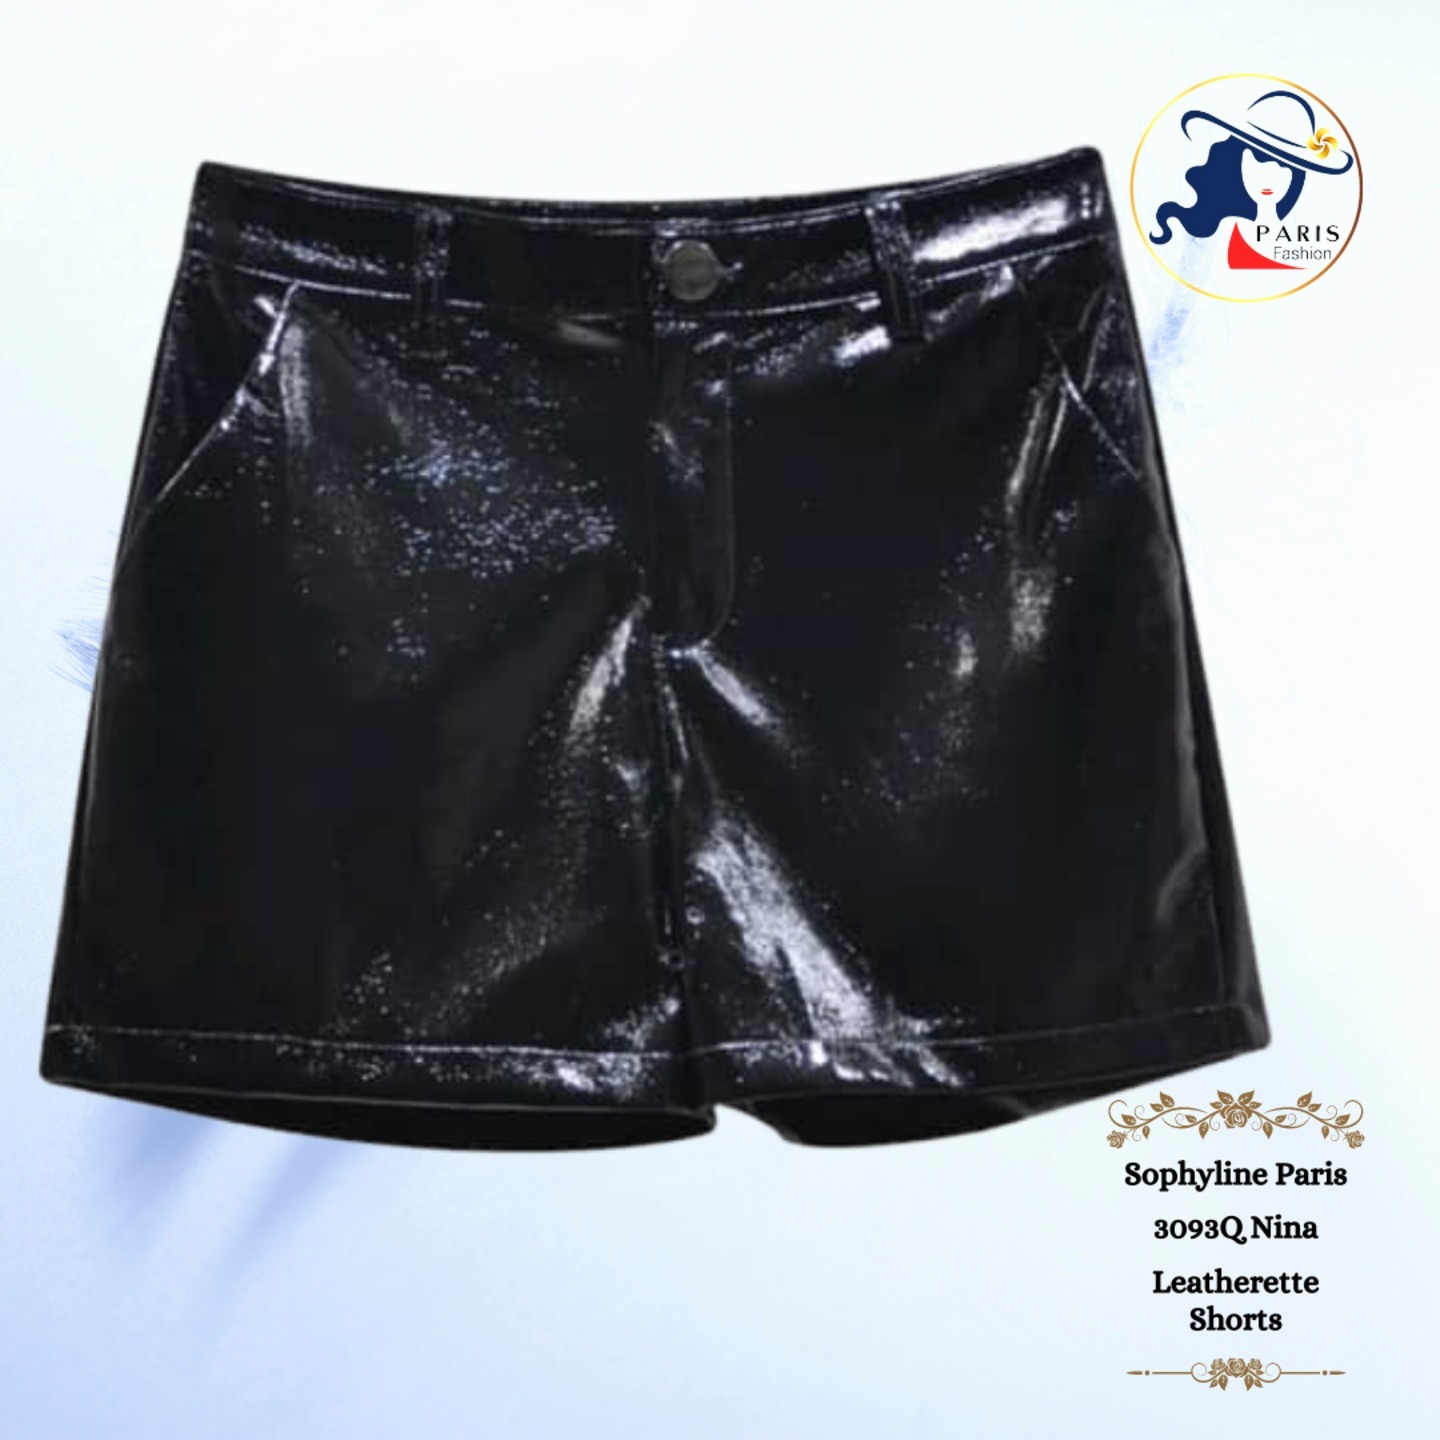 Sophyline Paris  3093Q Nina  Leatherette Shorts